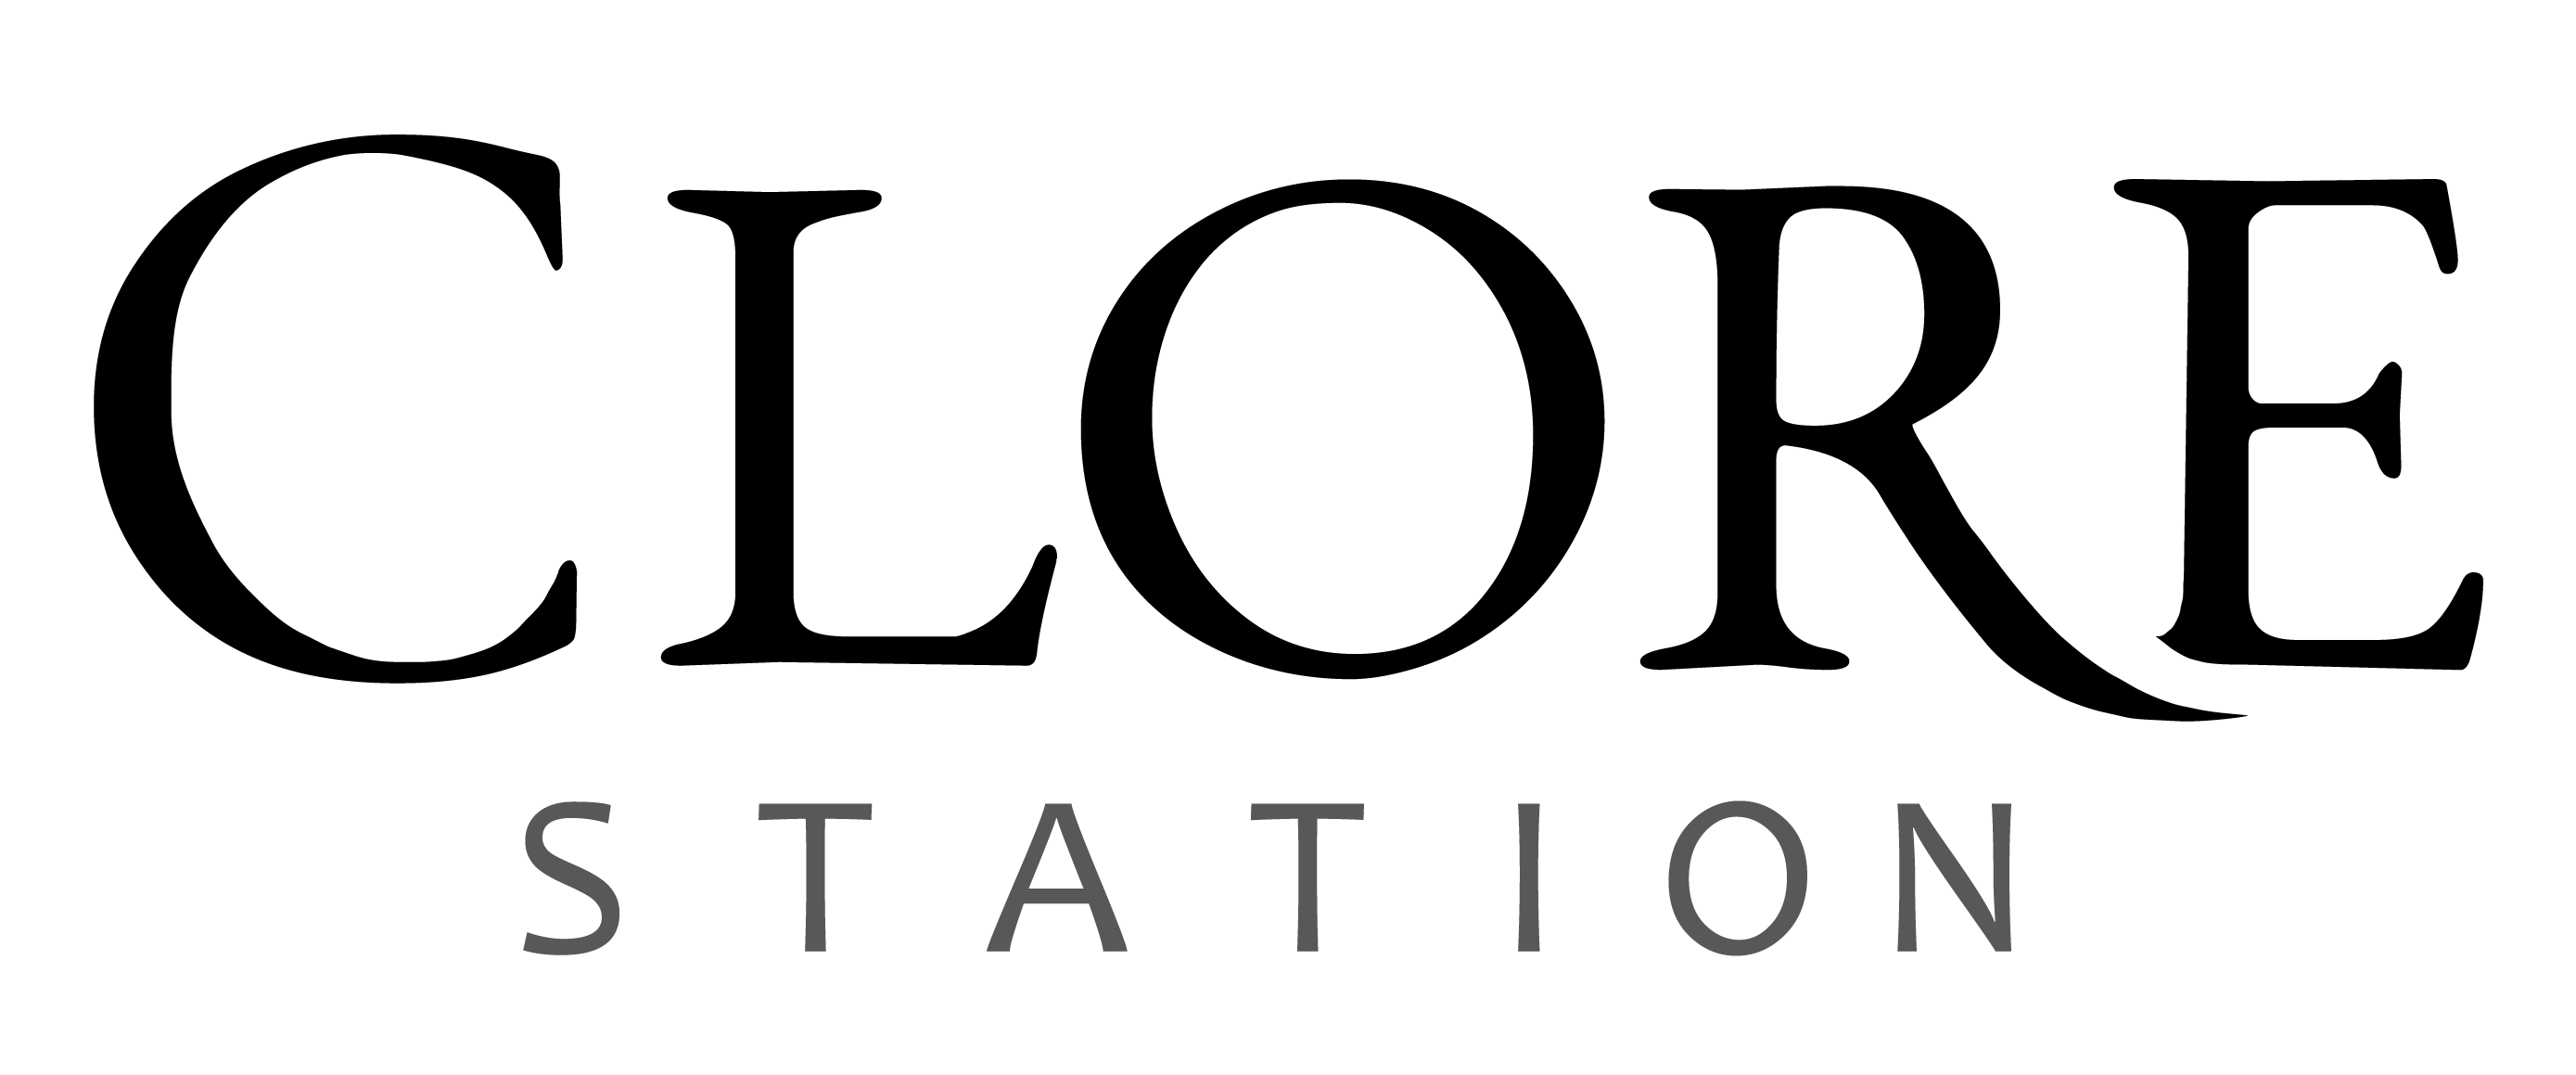 clore station logo-01